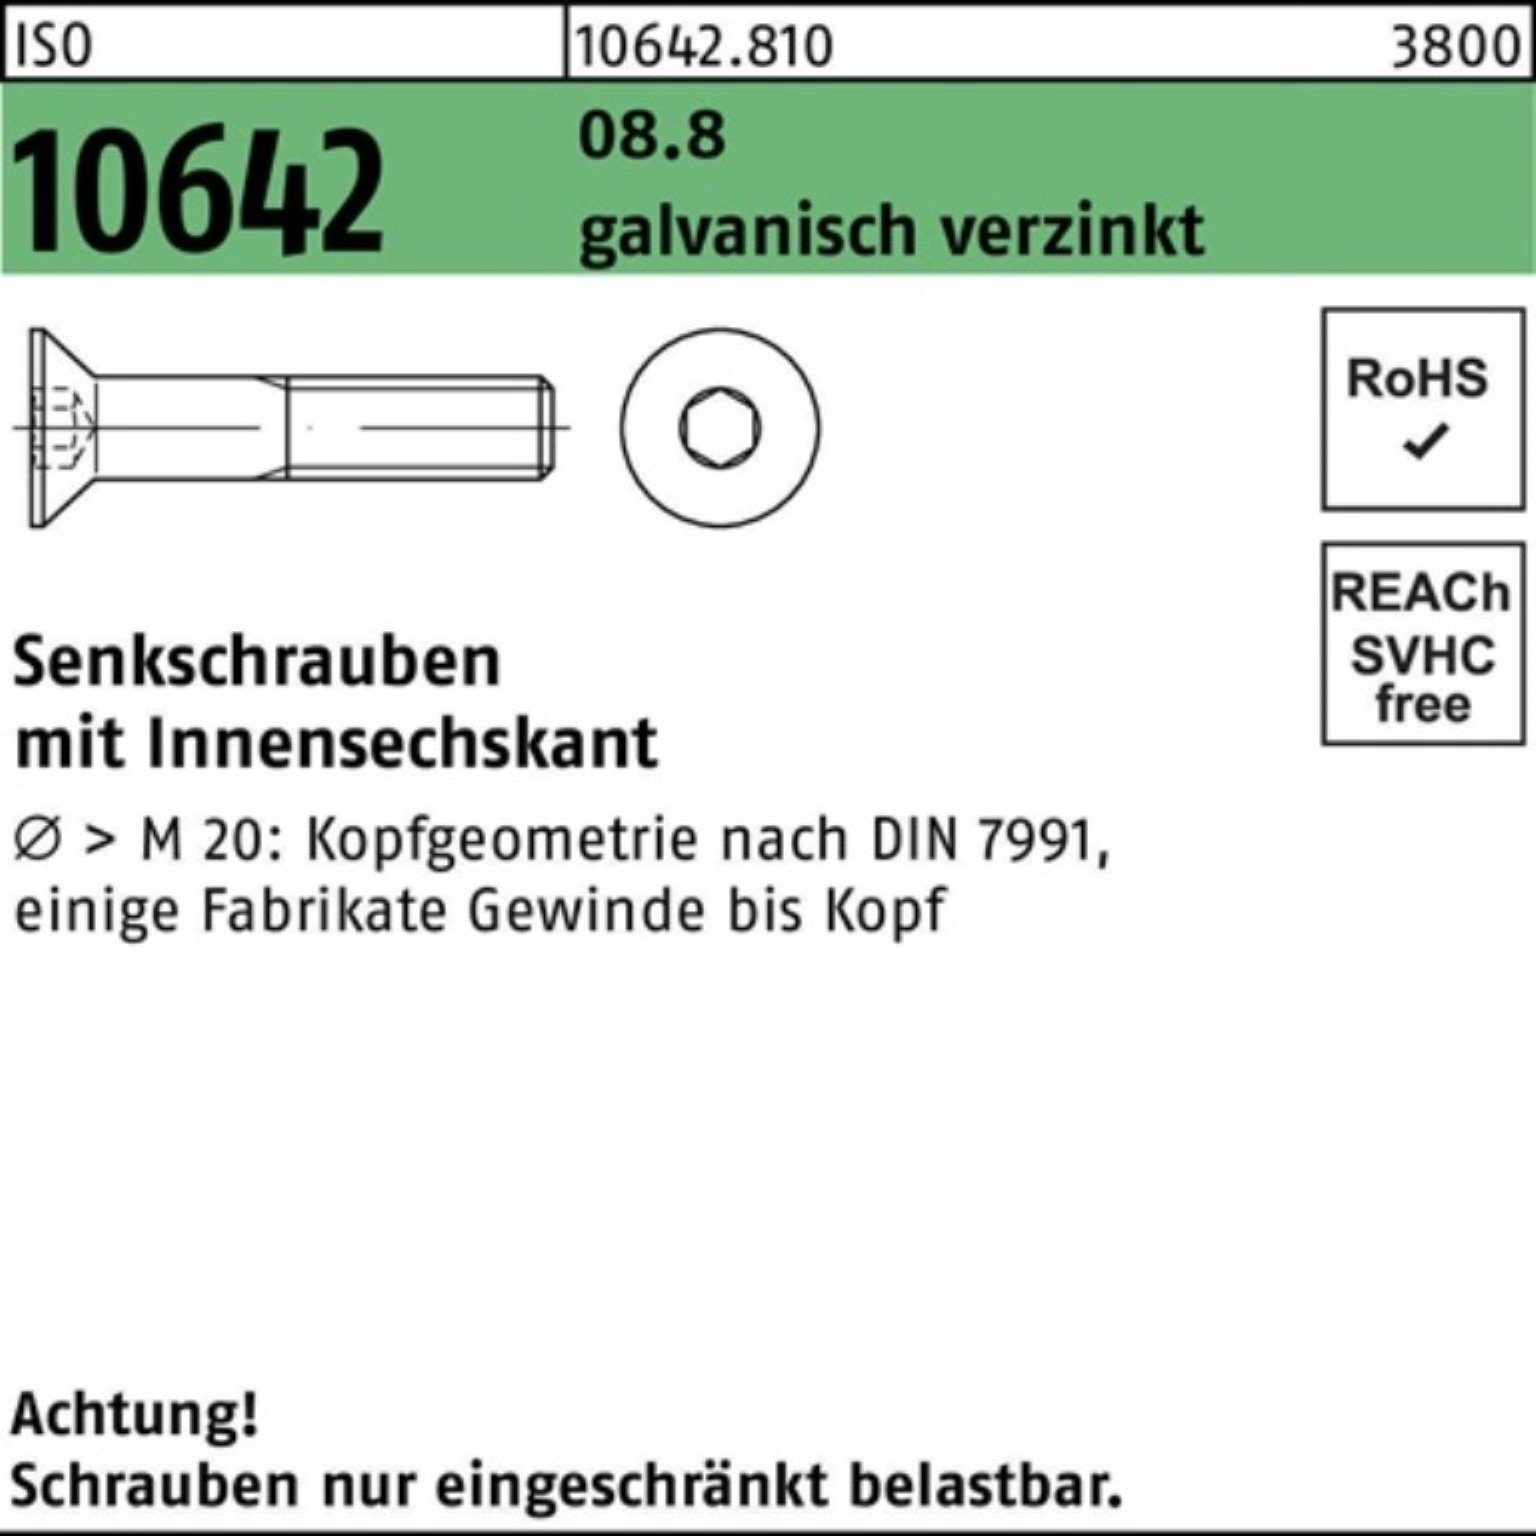 130 M20x Senkschraube Pack 10642 8.8 Reyher ISO 25 100er galv.verz. Senkschraube Innen-6kt